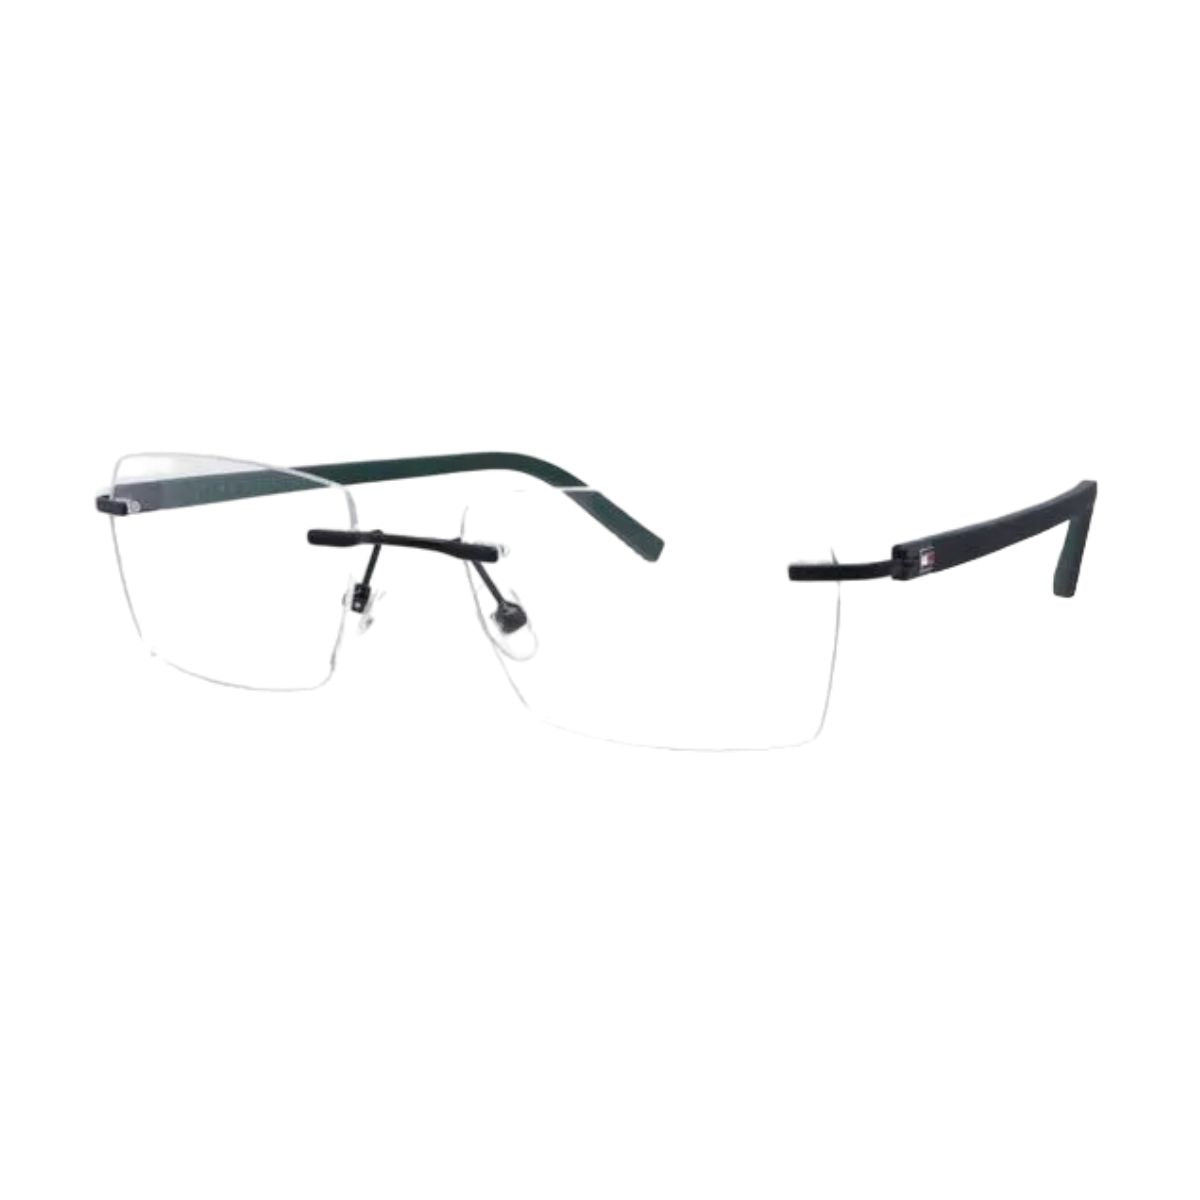 "Tommy Hilfiger 6201 C5 stylish eyewear frame for men and women at optorium"